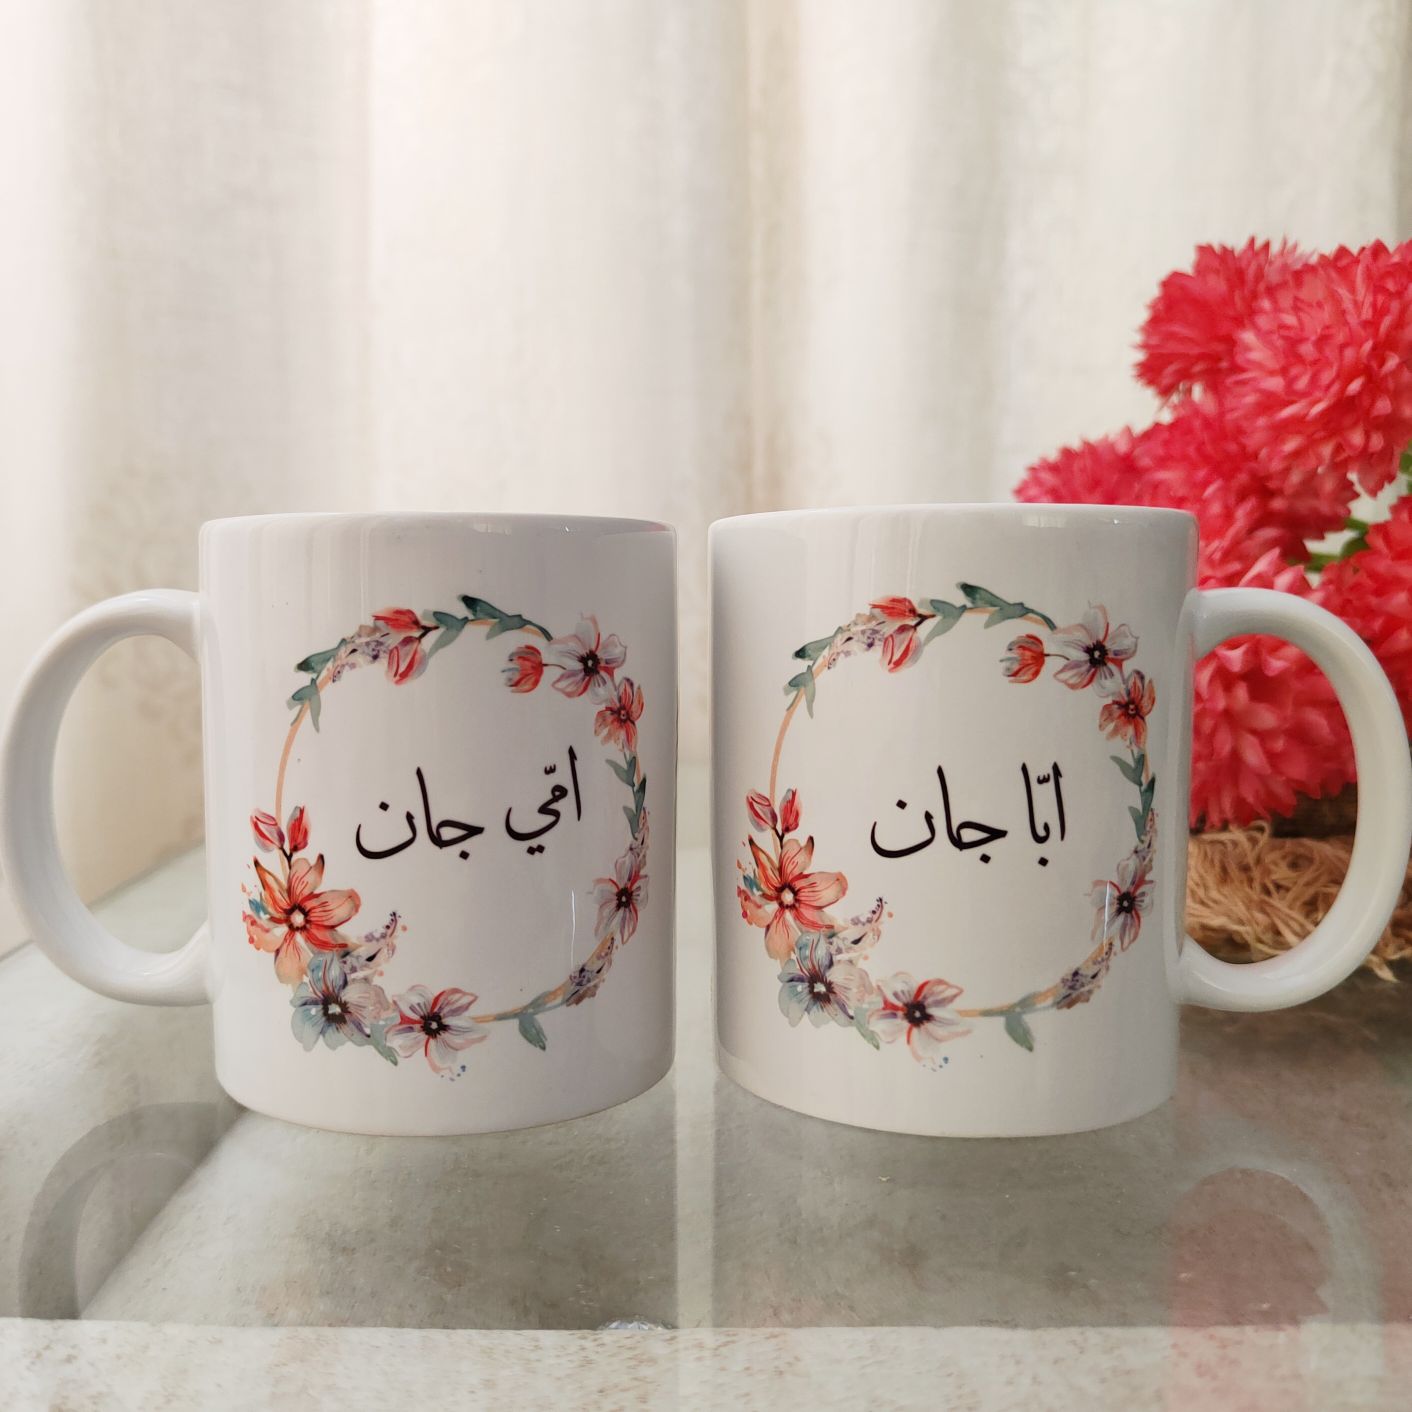 Couples' Mugs Gift Sets | Couples coffee mugs, Tea cup gifts, Couple mugs